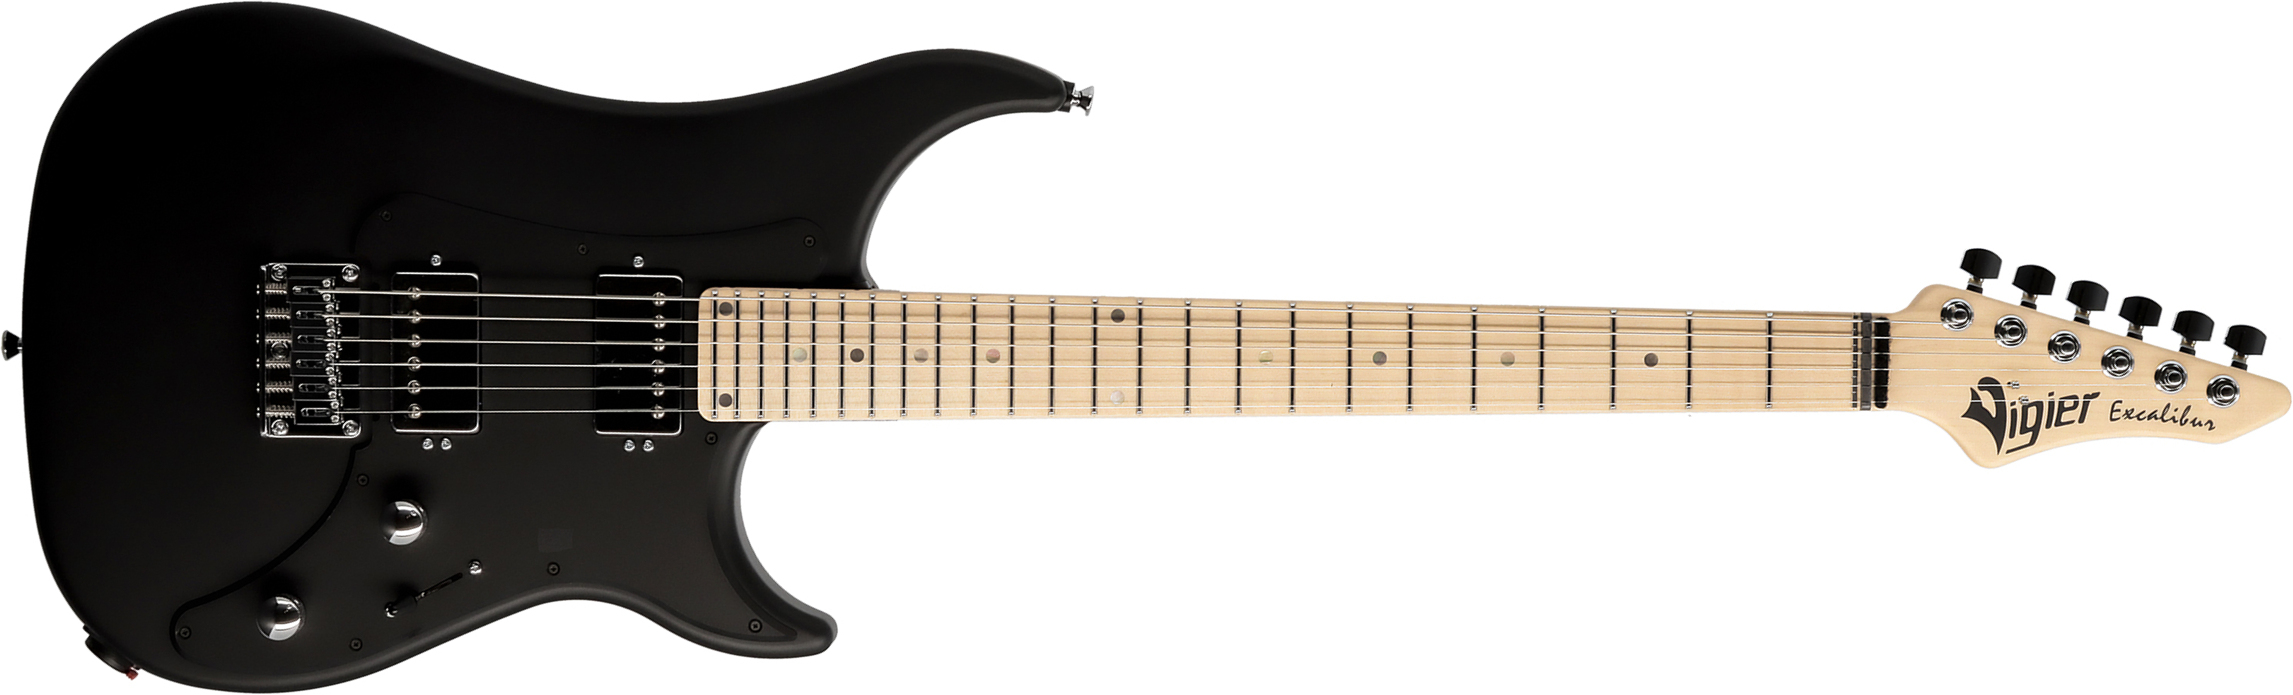 Vigier Excalibur Indus 2h Ht Mn - Black Matte - Elektrische gitaar in Str-vorm - Main picture